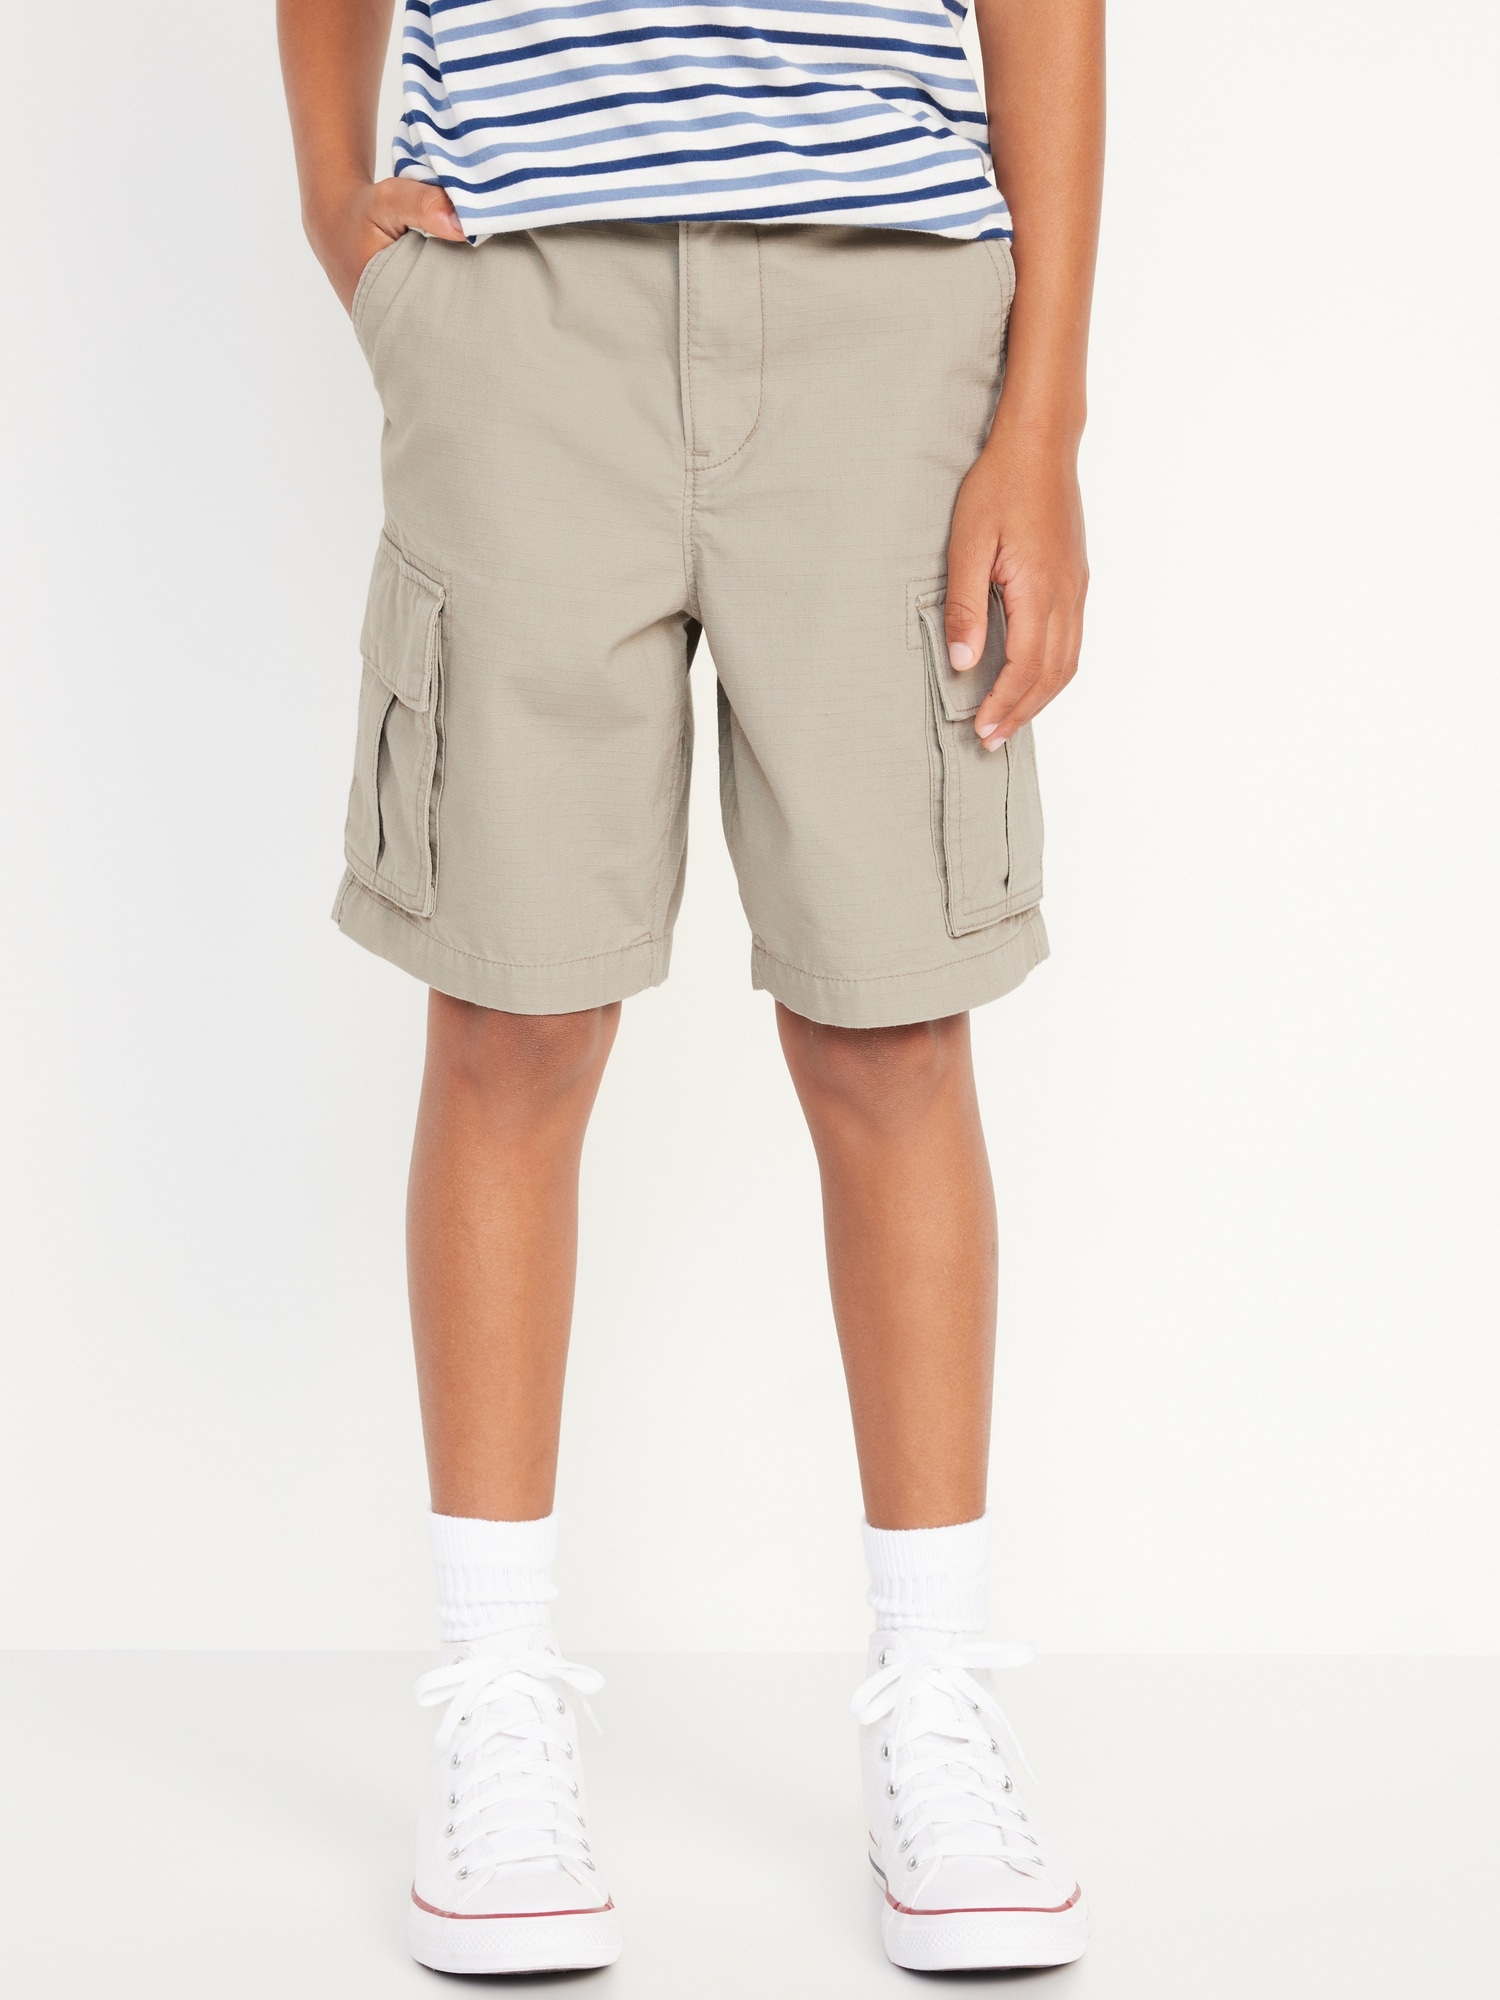 Knee Length Loose Cargo Shorts for Boys